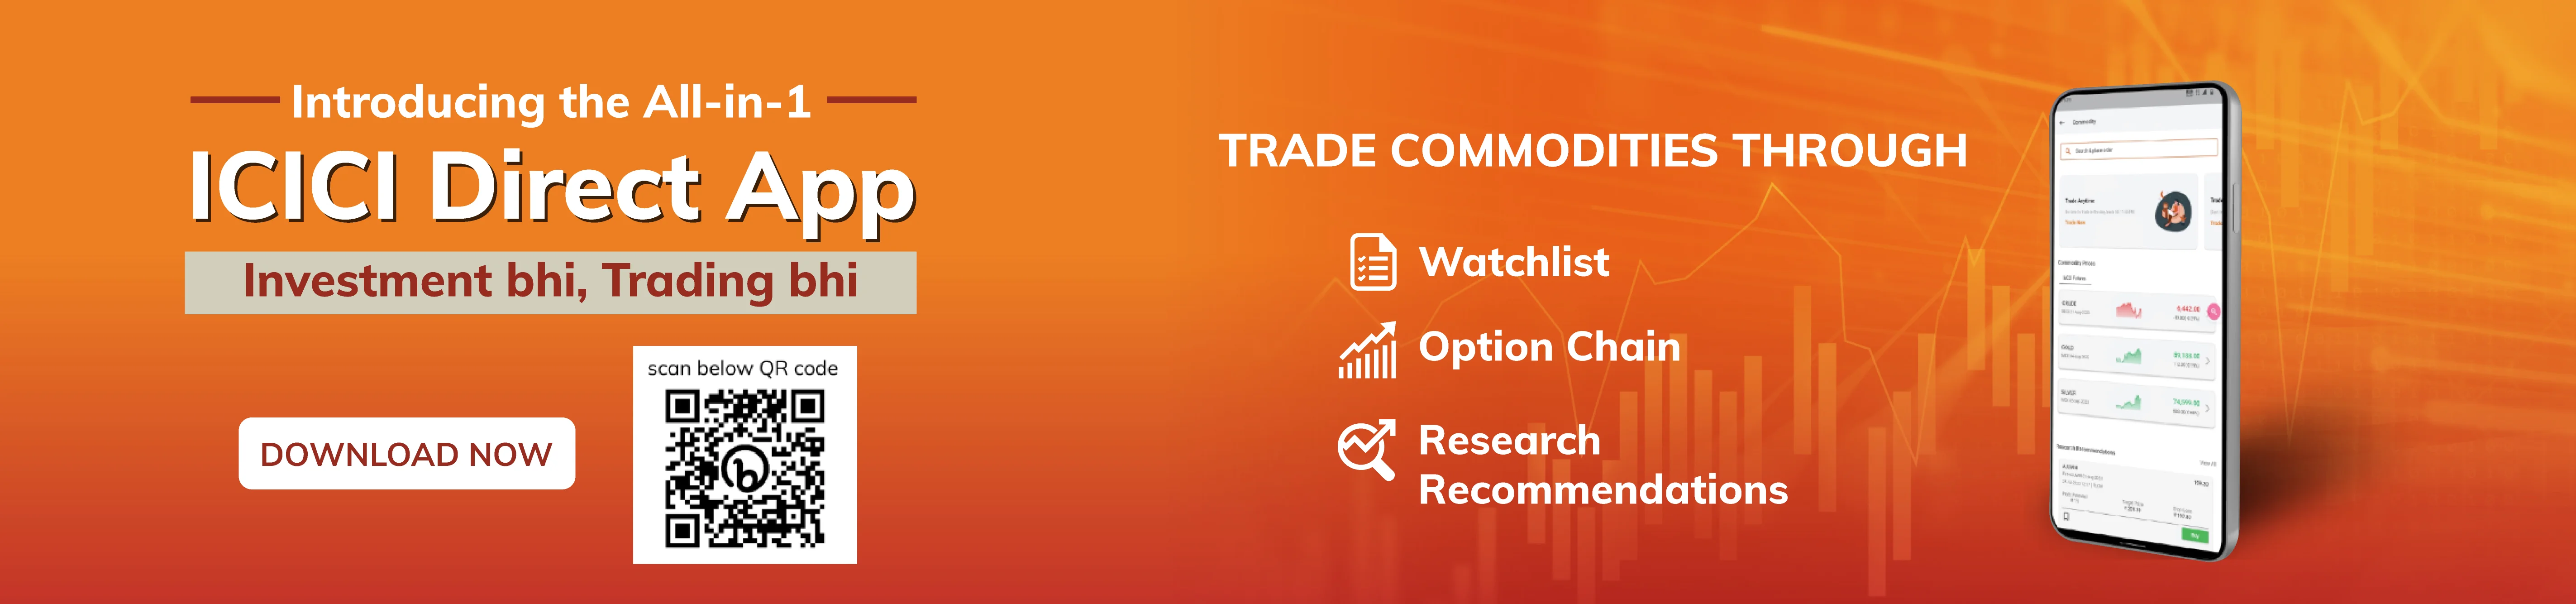 ICICIdirect App - Trade Commoditiy